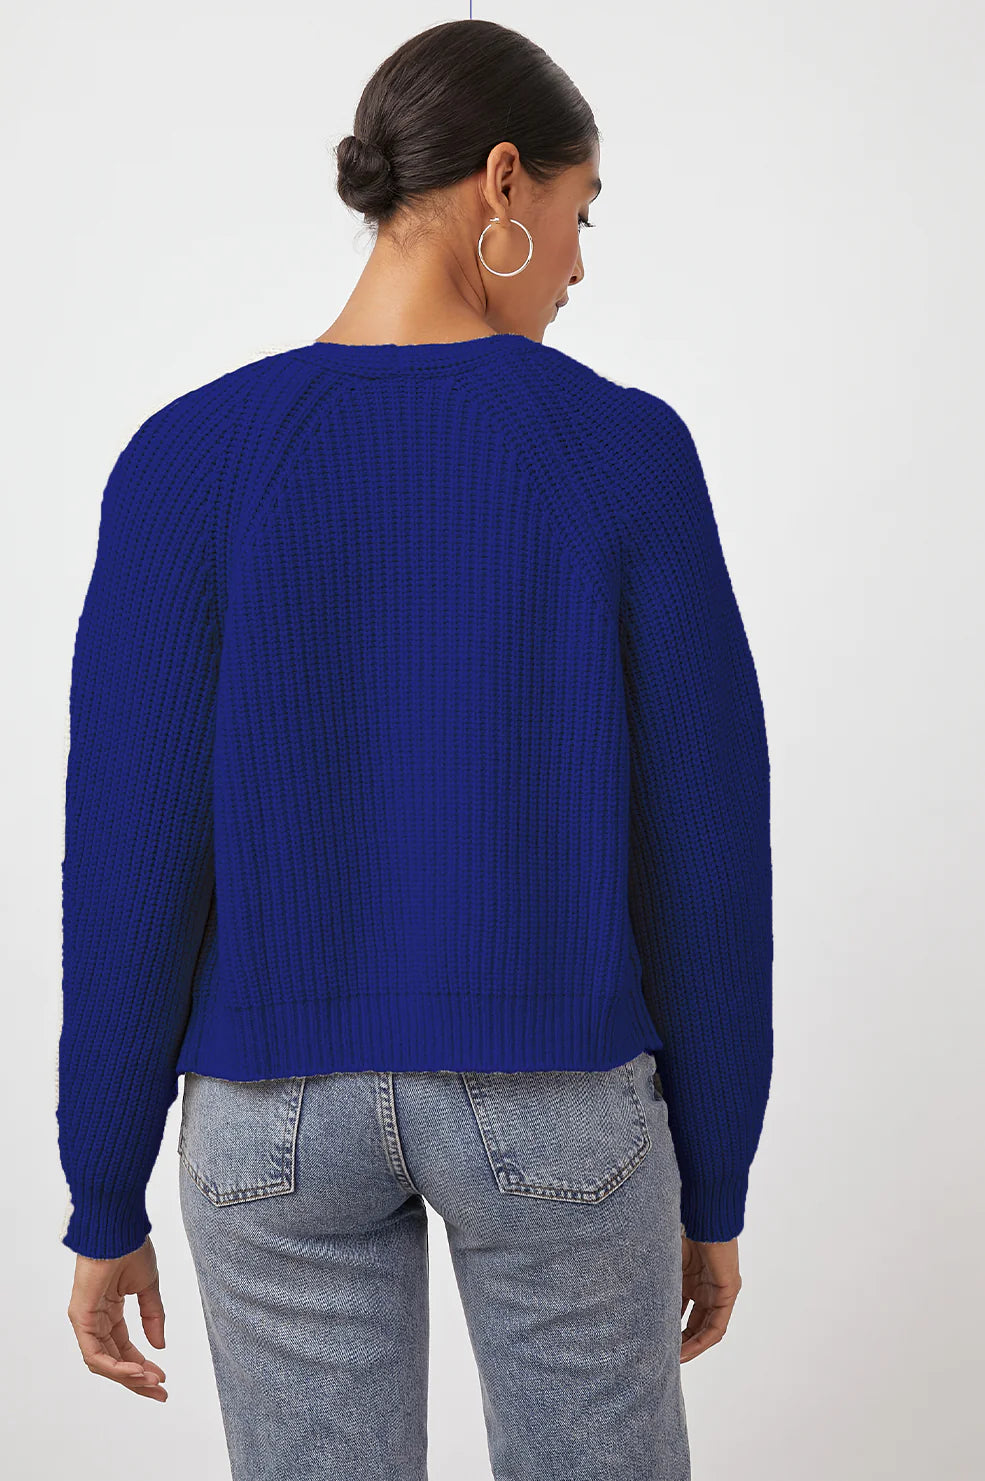 Josie Cobalt Sweater